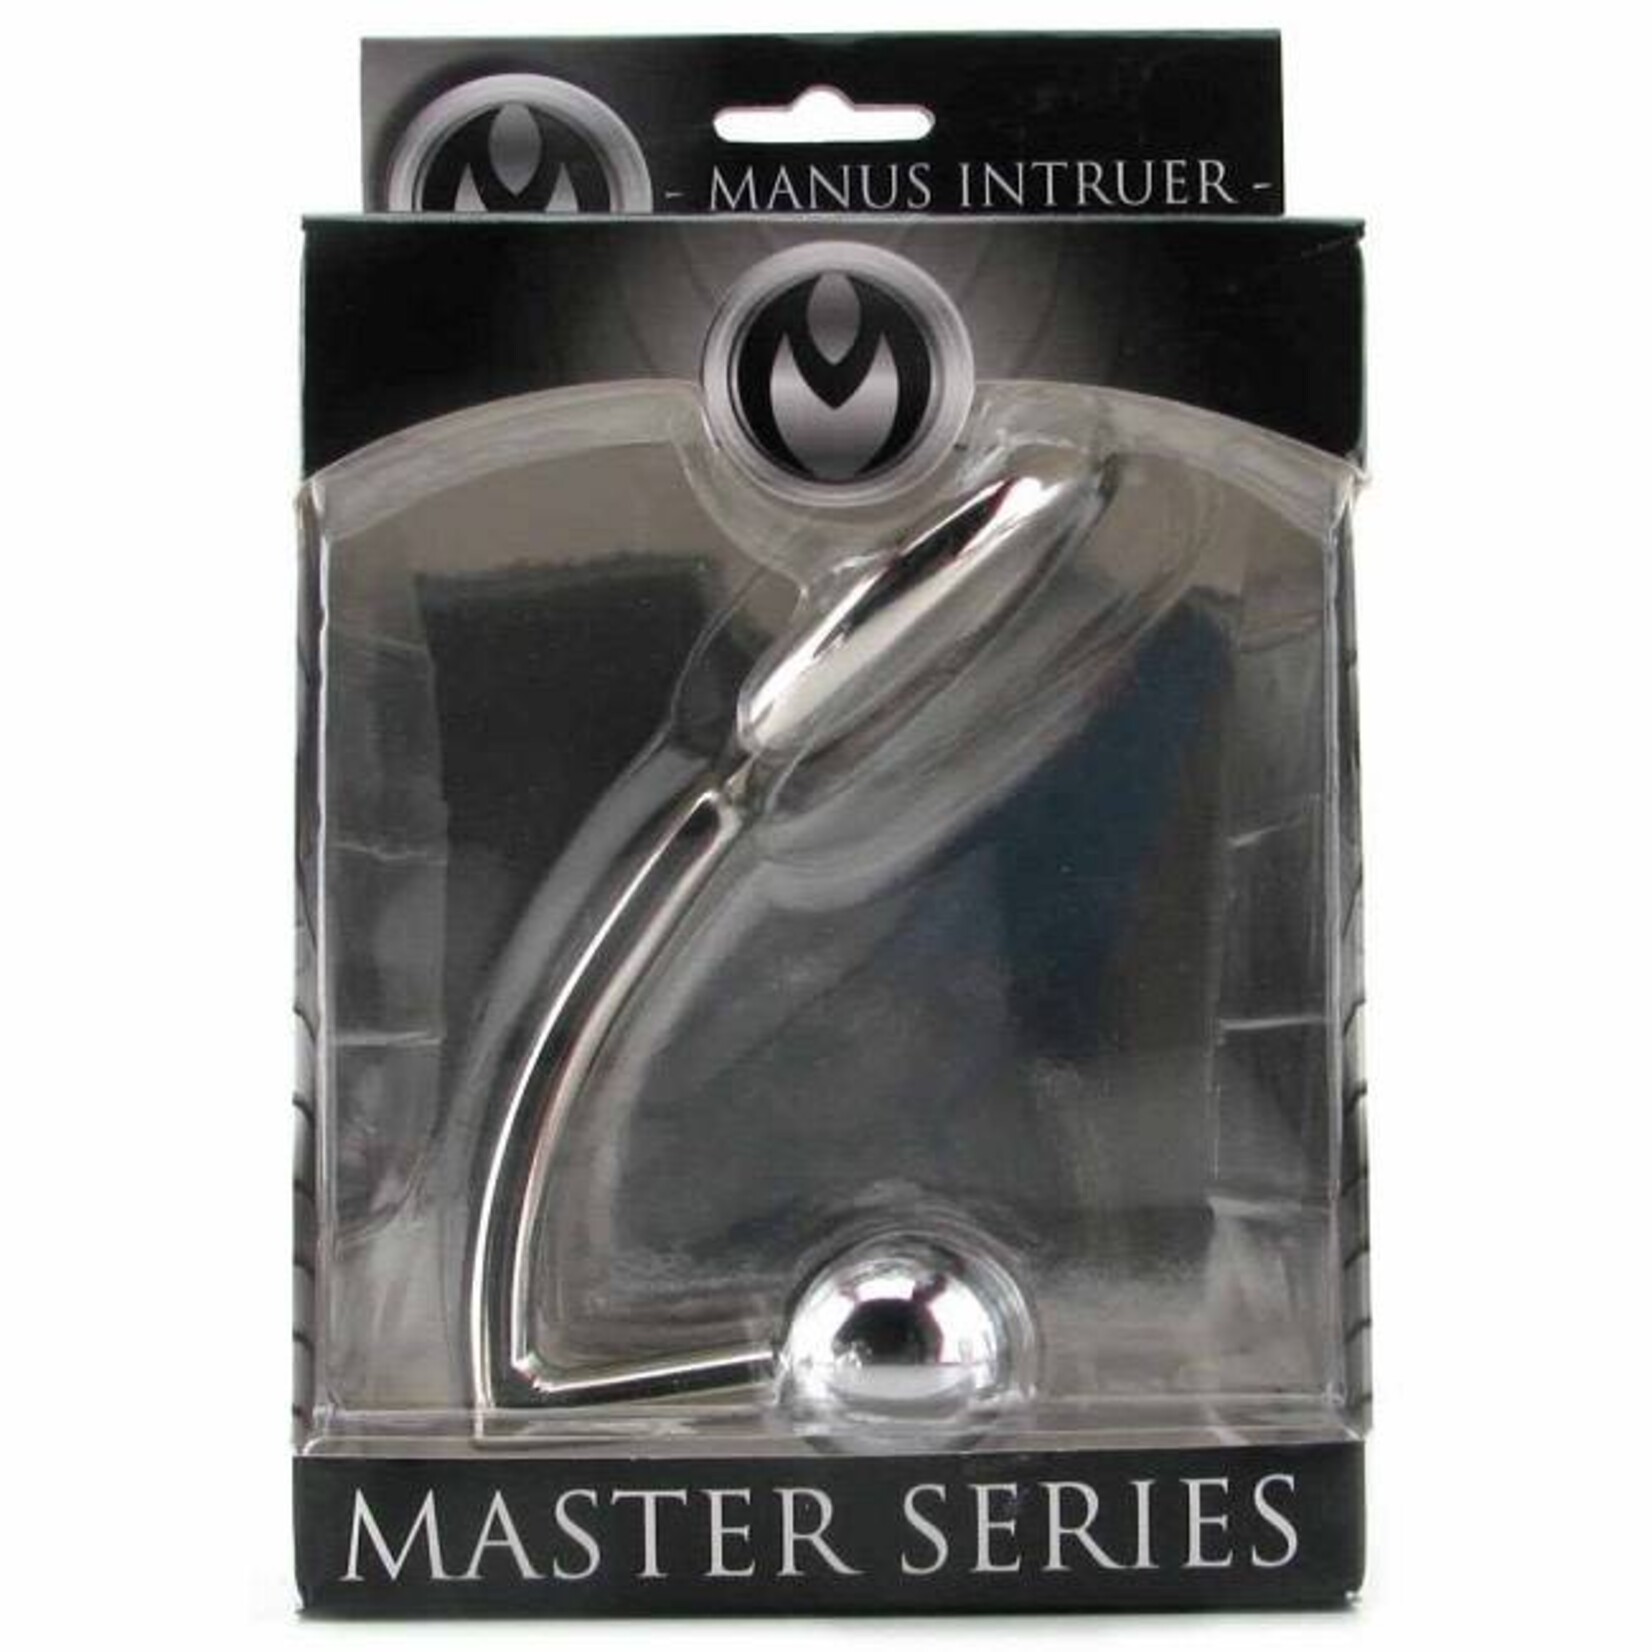 Master Series Master Series The Manus Intruder